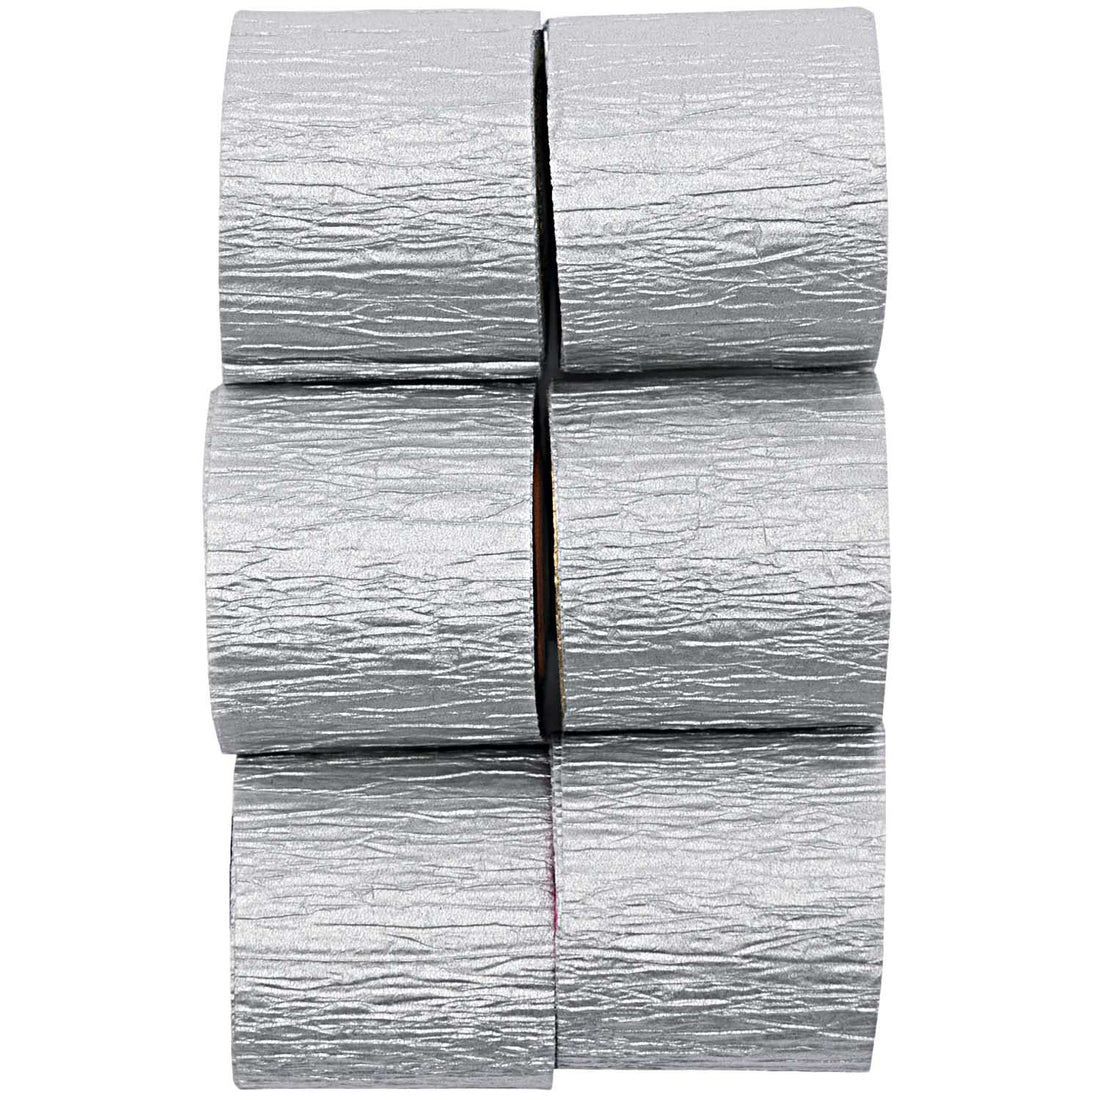 Tiras de papel crepe plateado | Pack 6 uds.